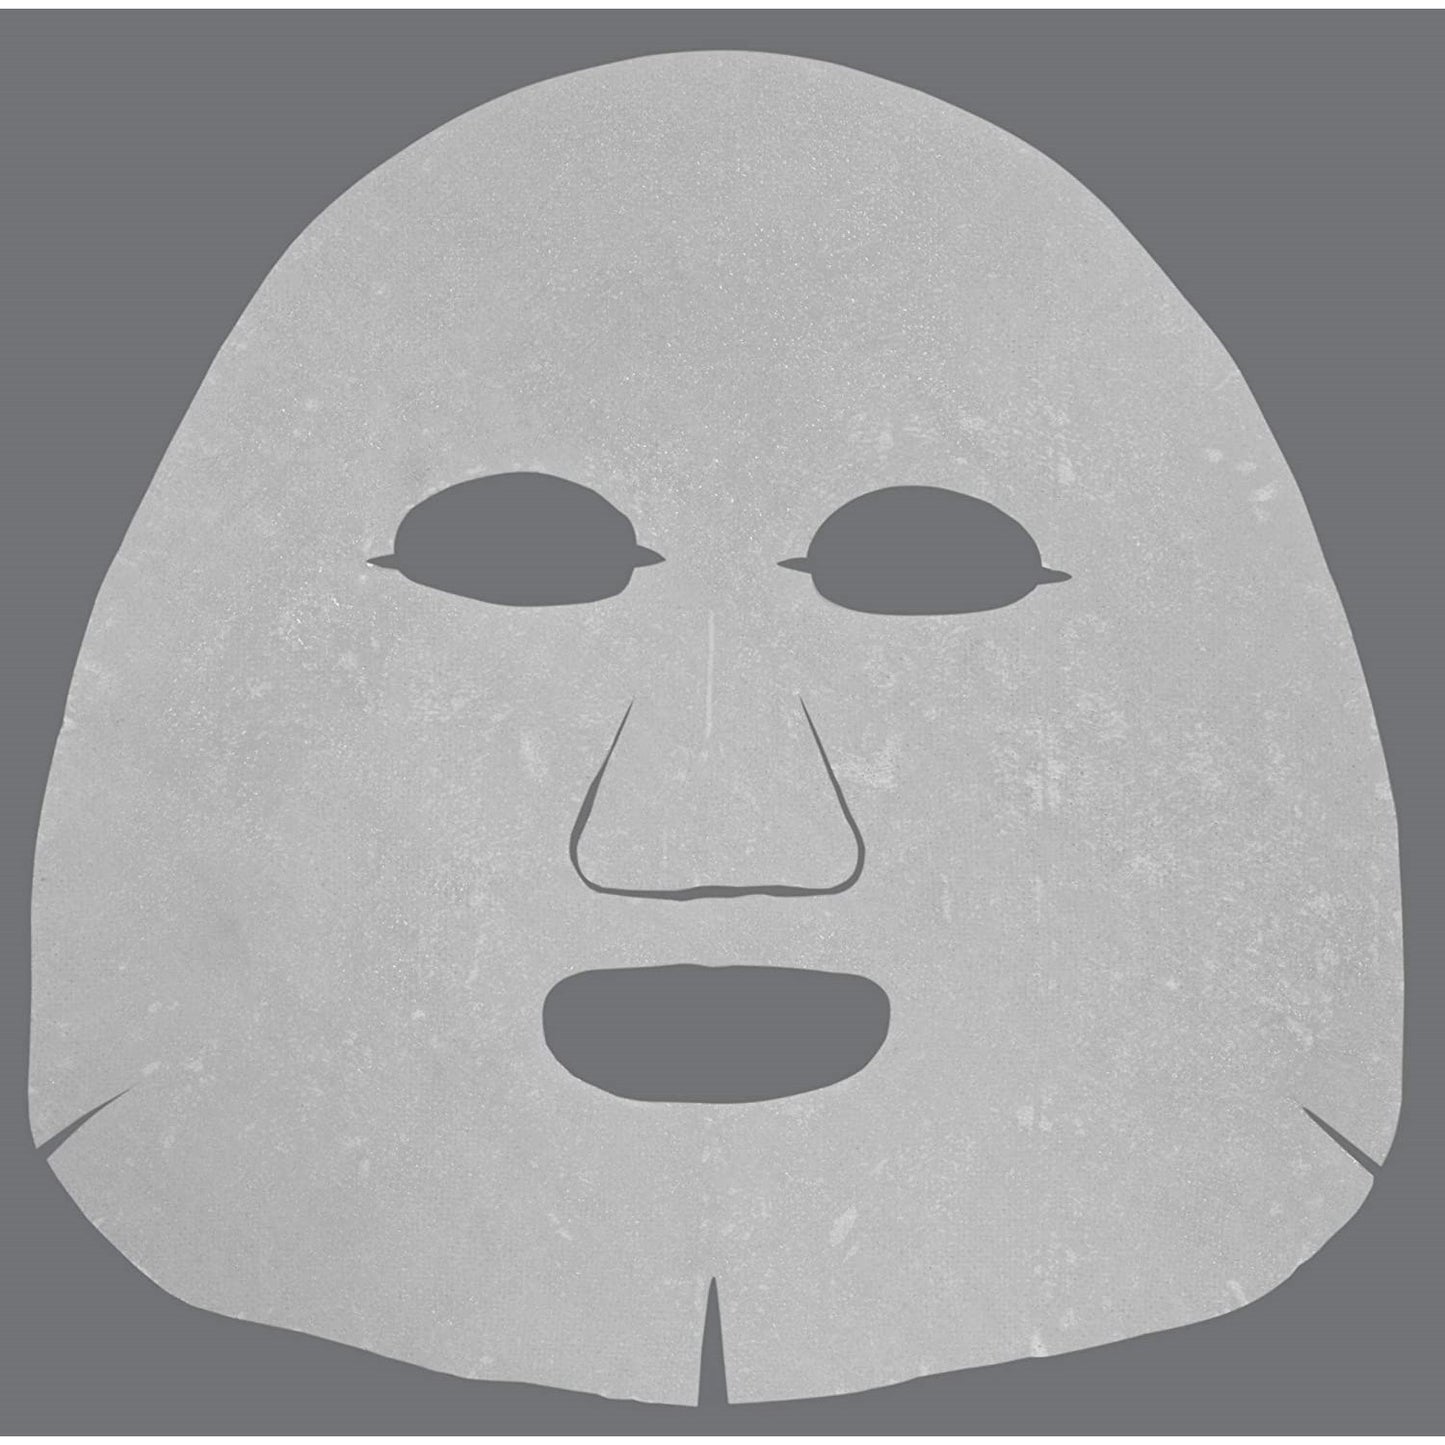 MINON Amino Moist Face Mask New Edition 22ml 4pcs (Made in Japan)